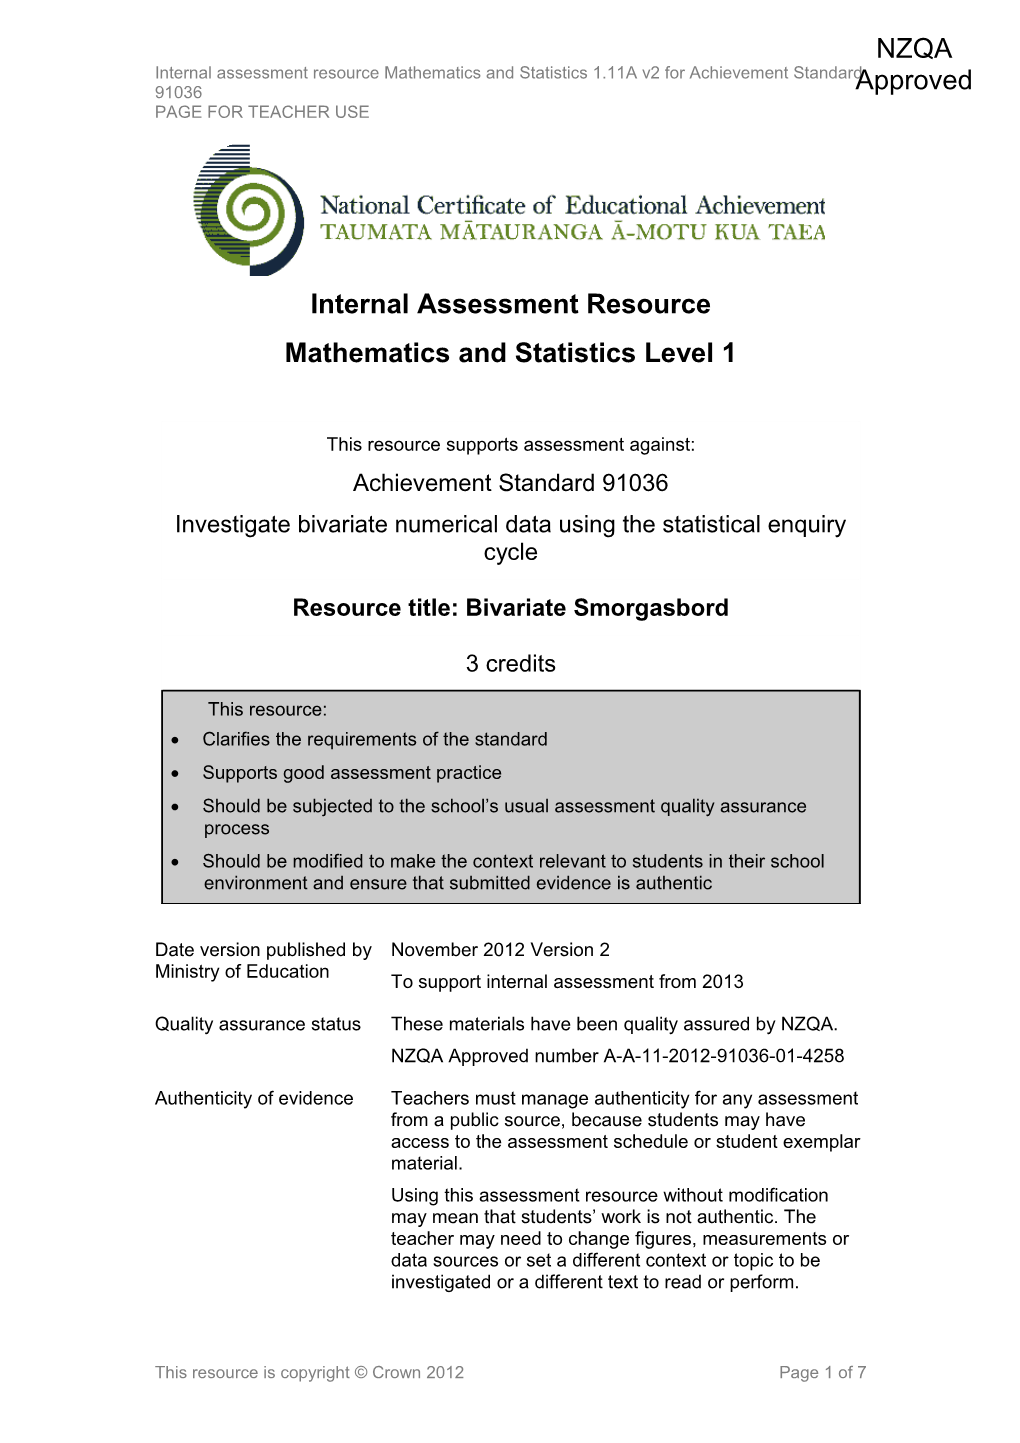 Level 1 Mathematics and Statistics Internal Assessment Resource